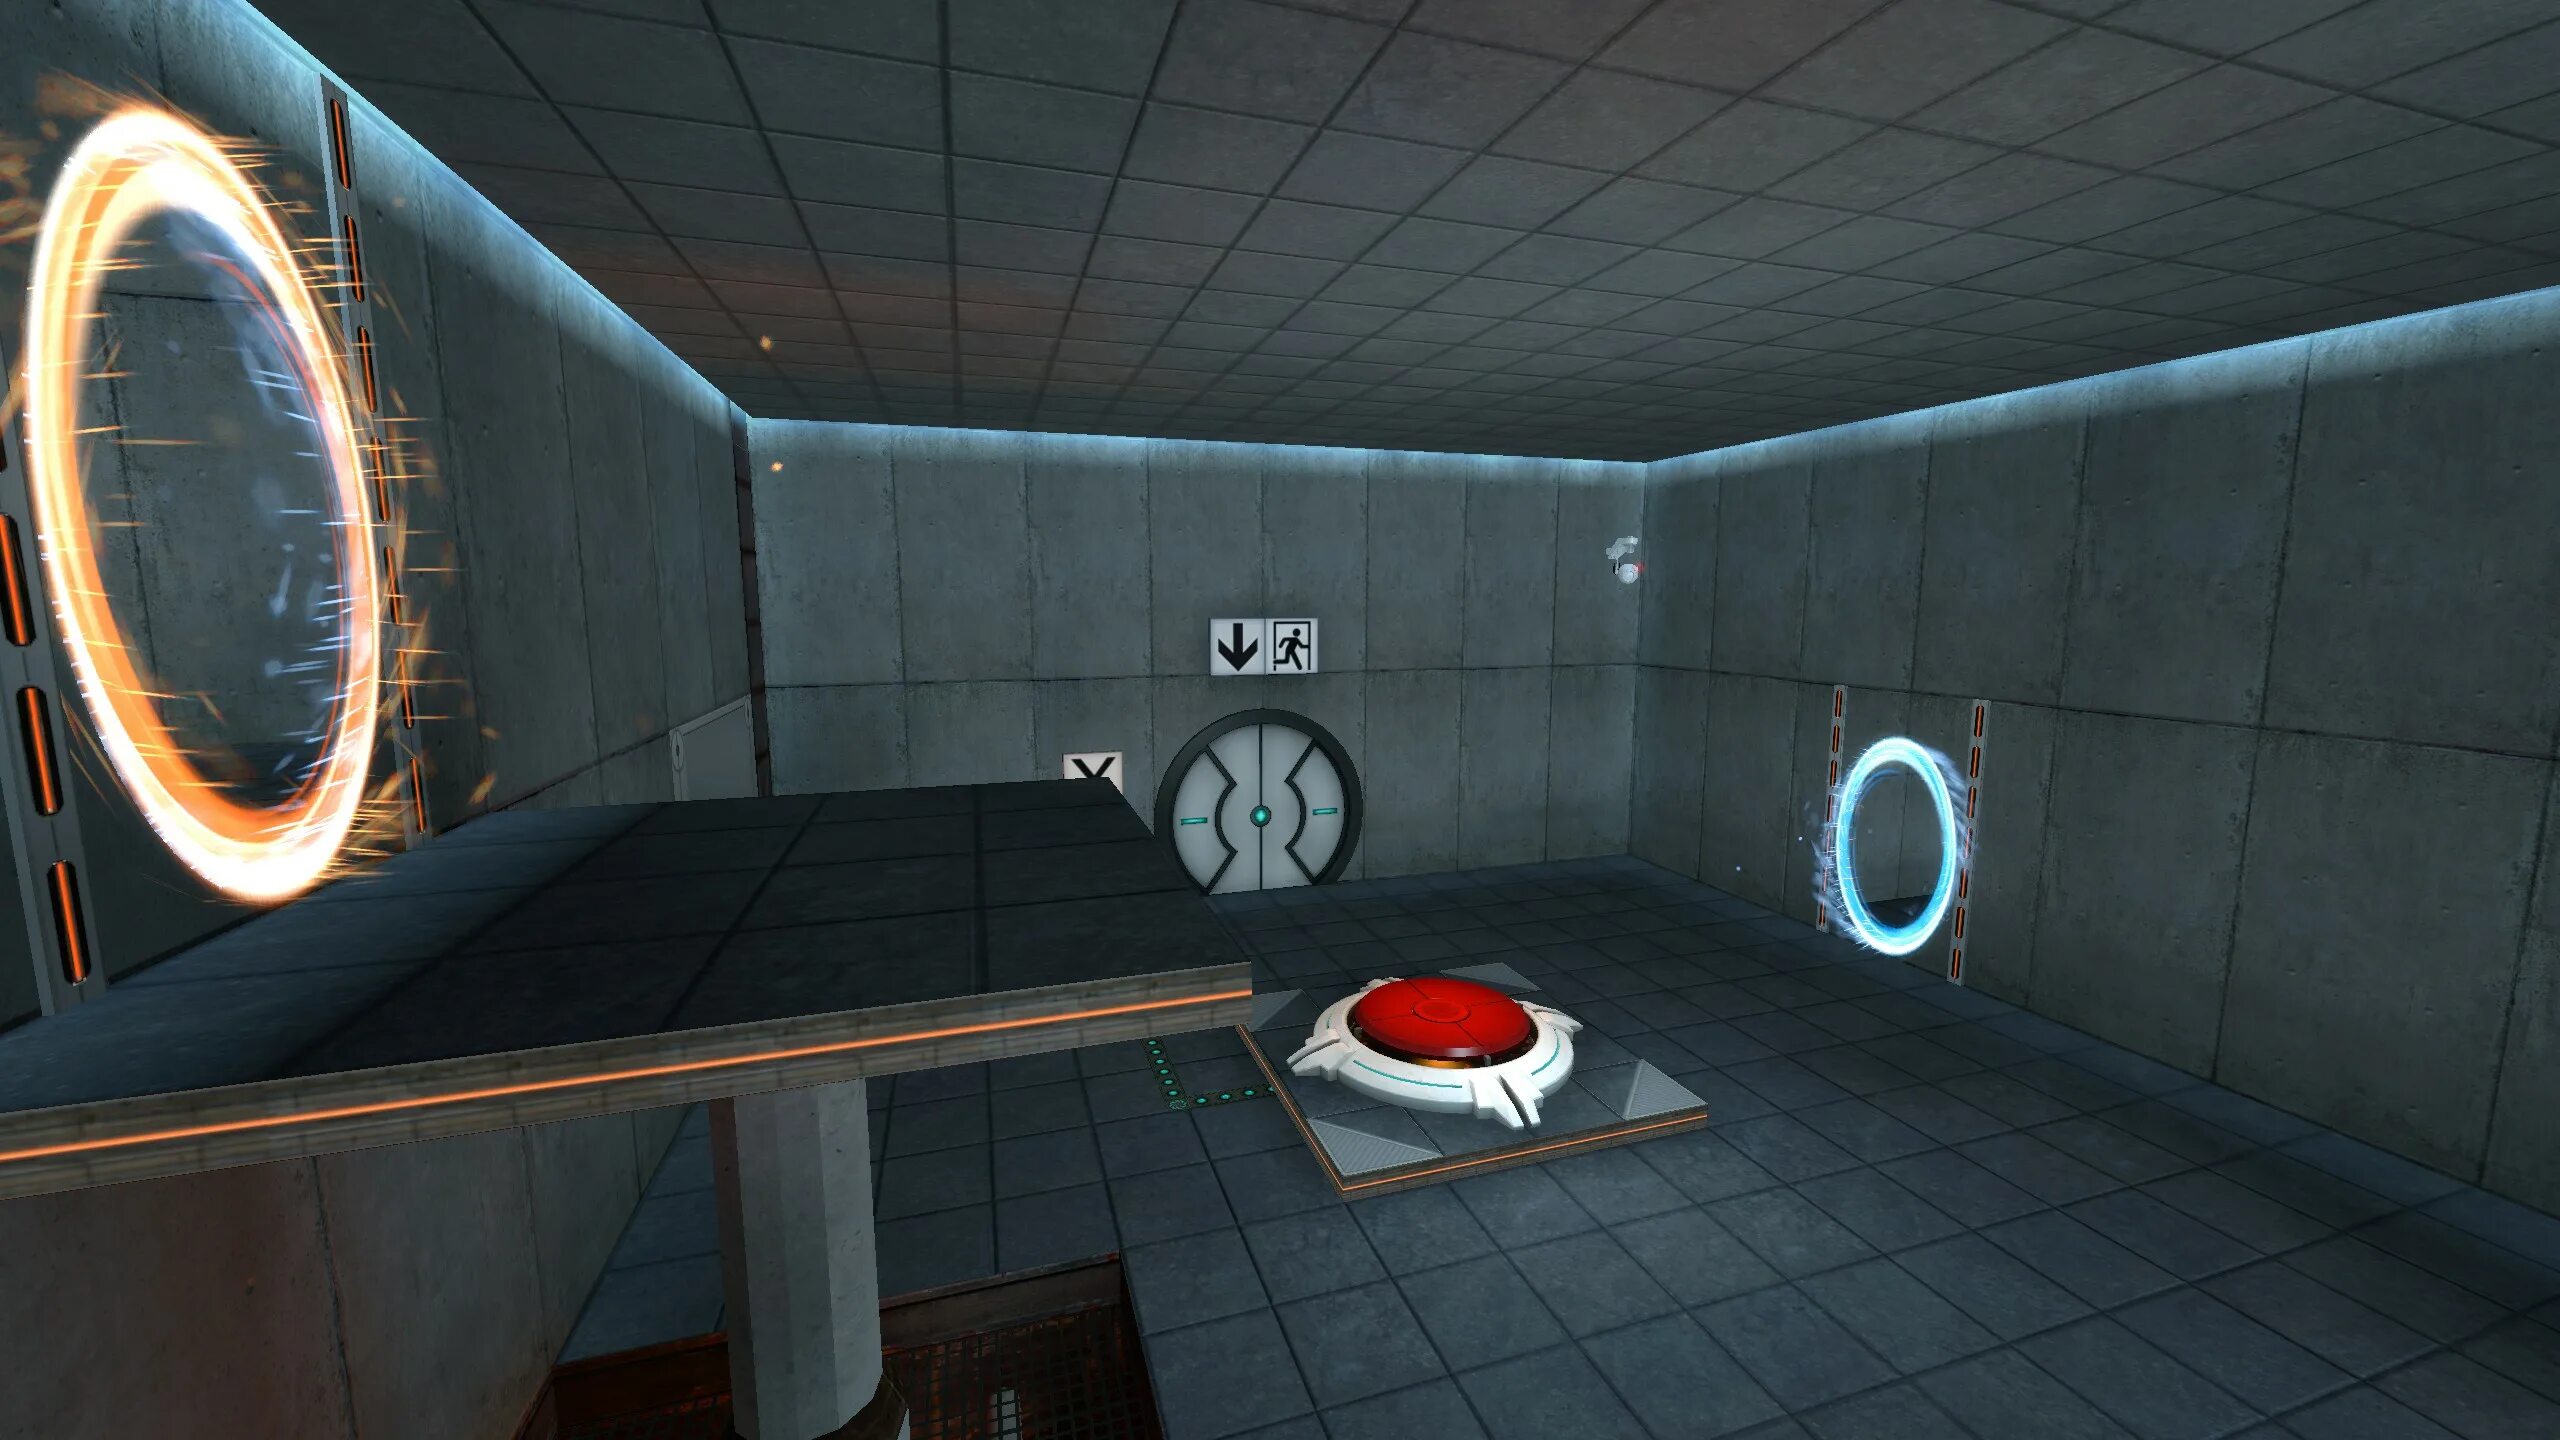 Two chamber. Portal 2 тестовая камера 1. Дверь тестовая камера Portal 2. Portal 2 Test Chamber. Portal 2 комната.